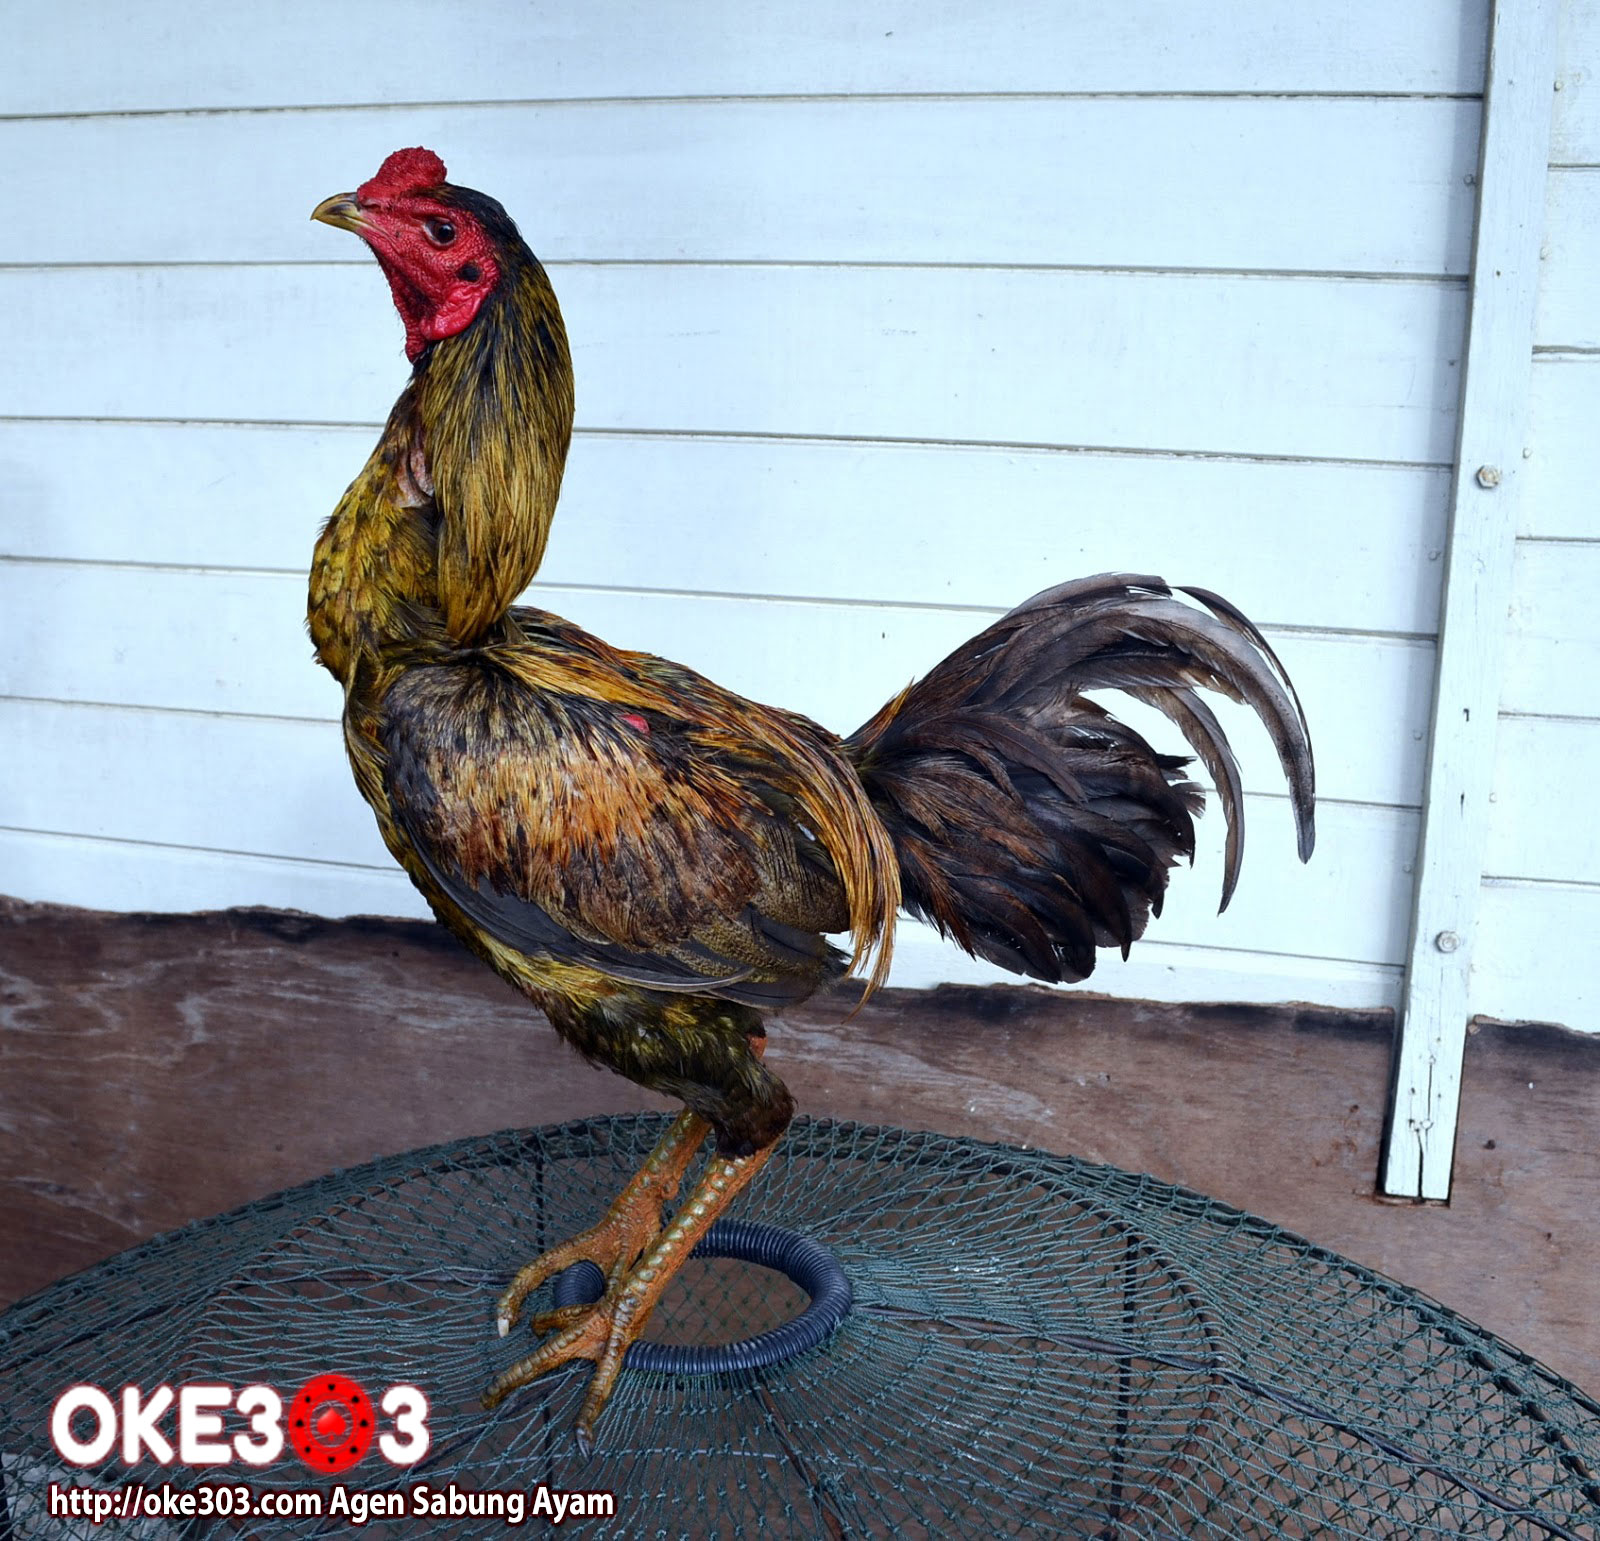 Www.Oke303.com Agen Sabung Ayam.: Jenis-Jenis Ayam laga 